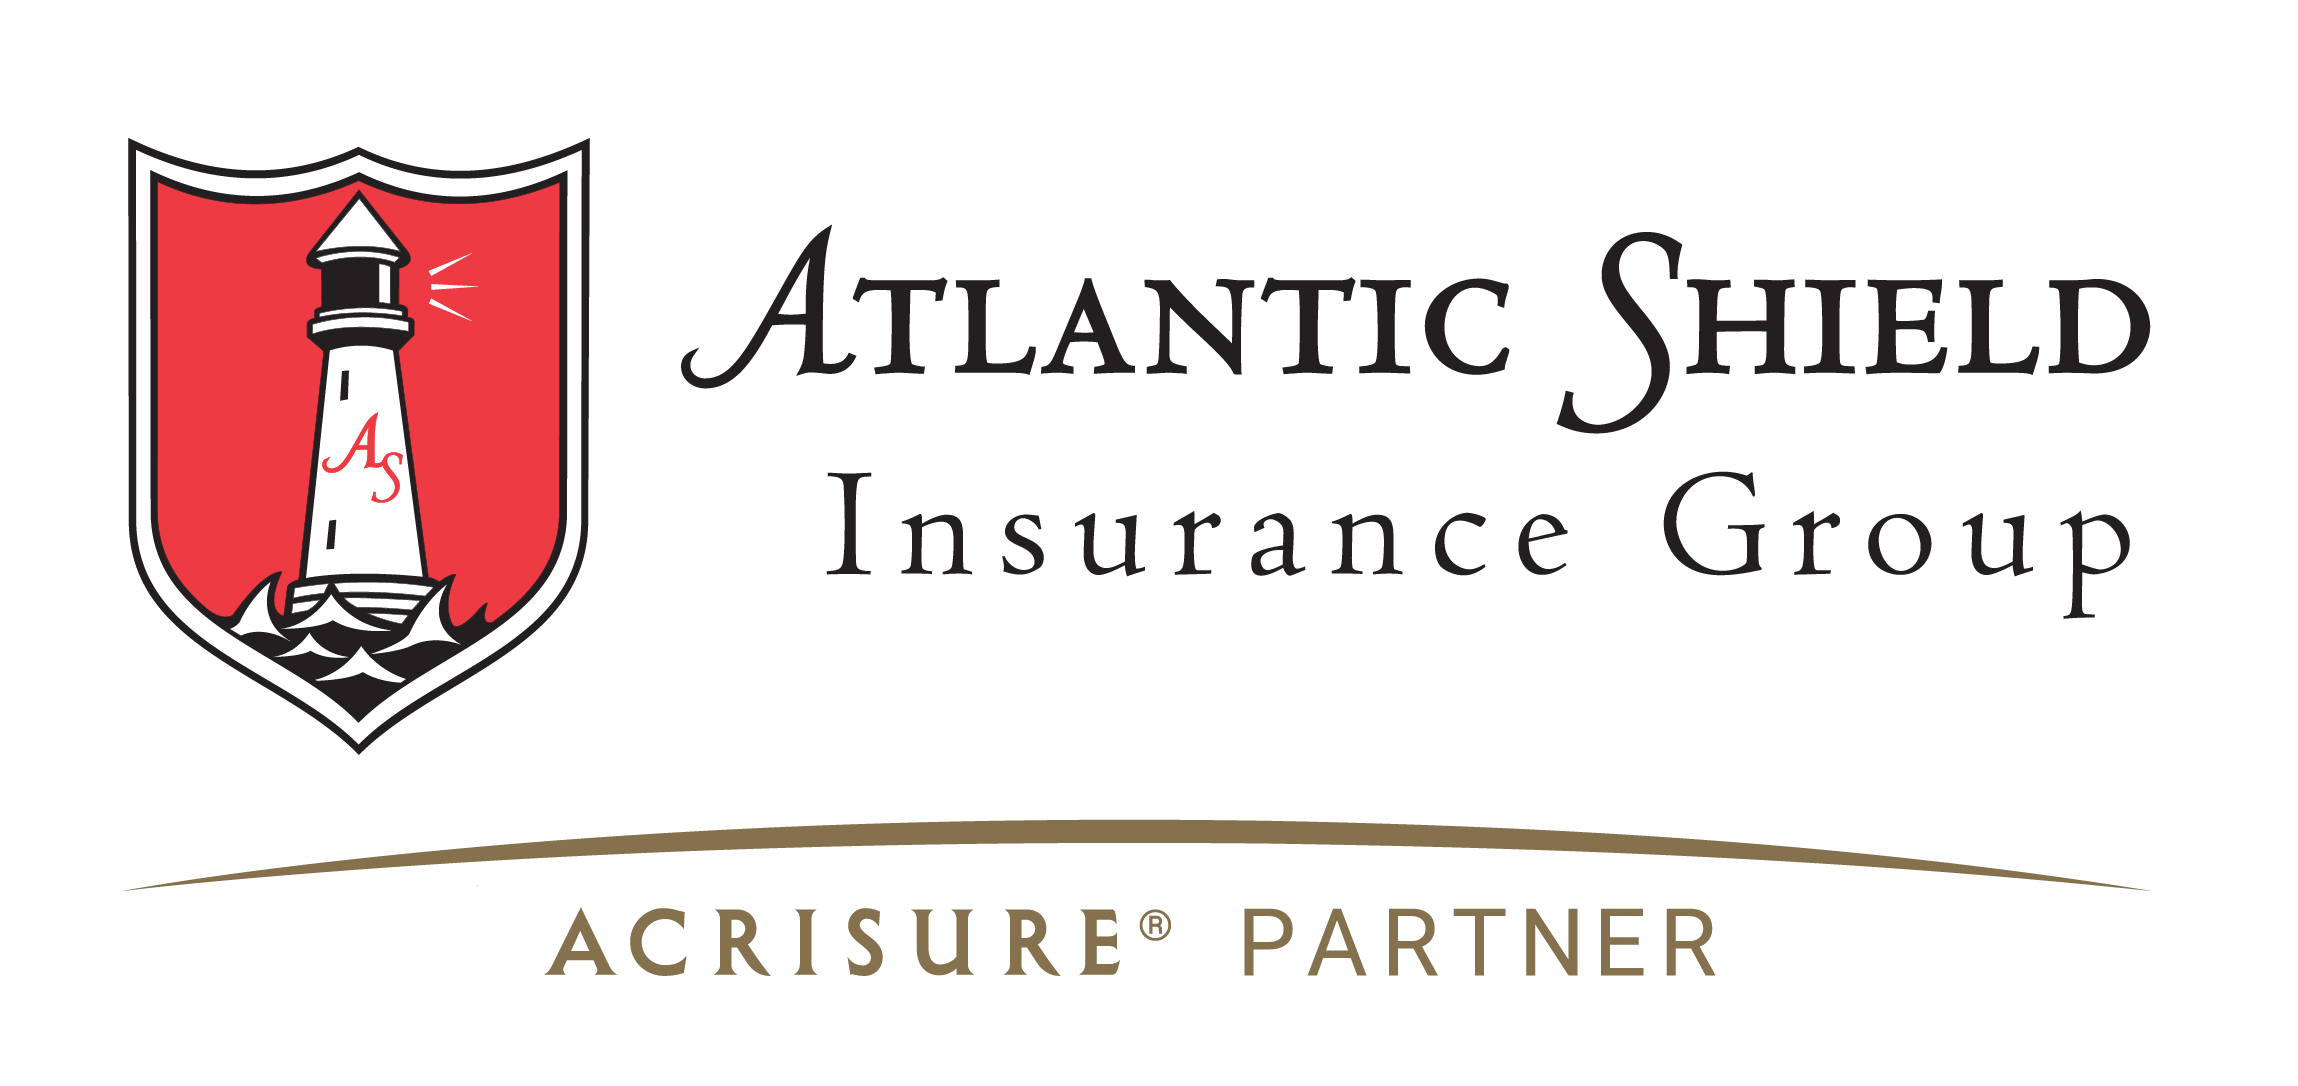 Atlantic Shield Insurance Group